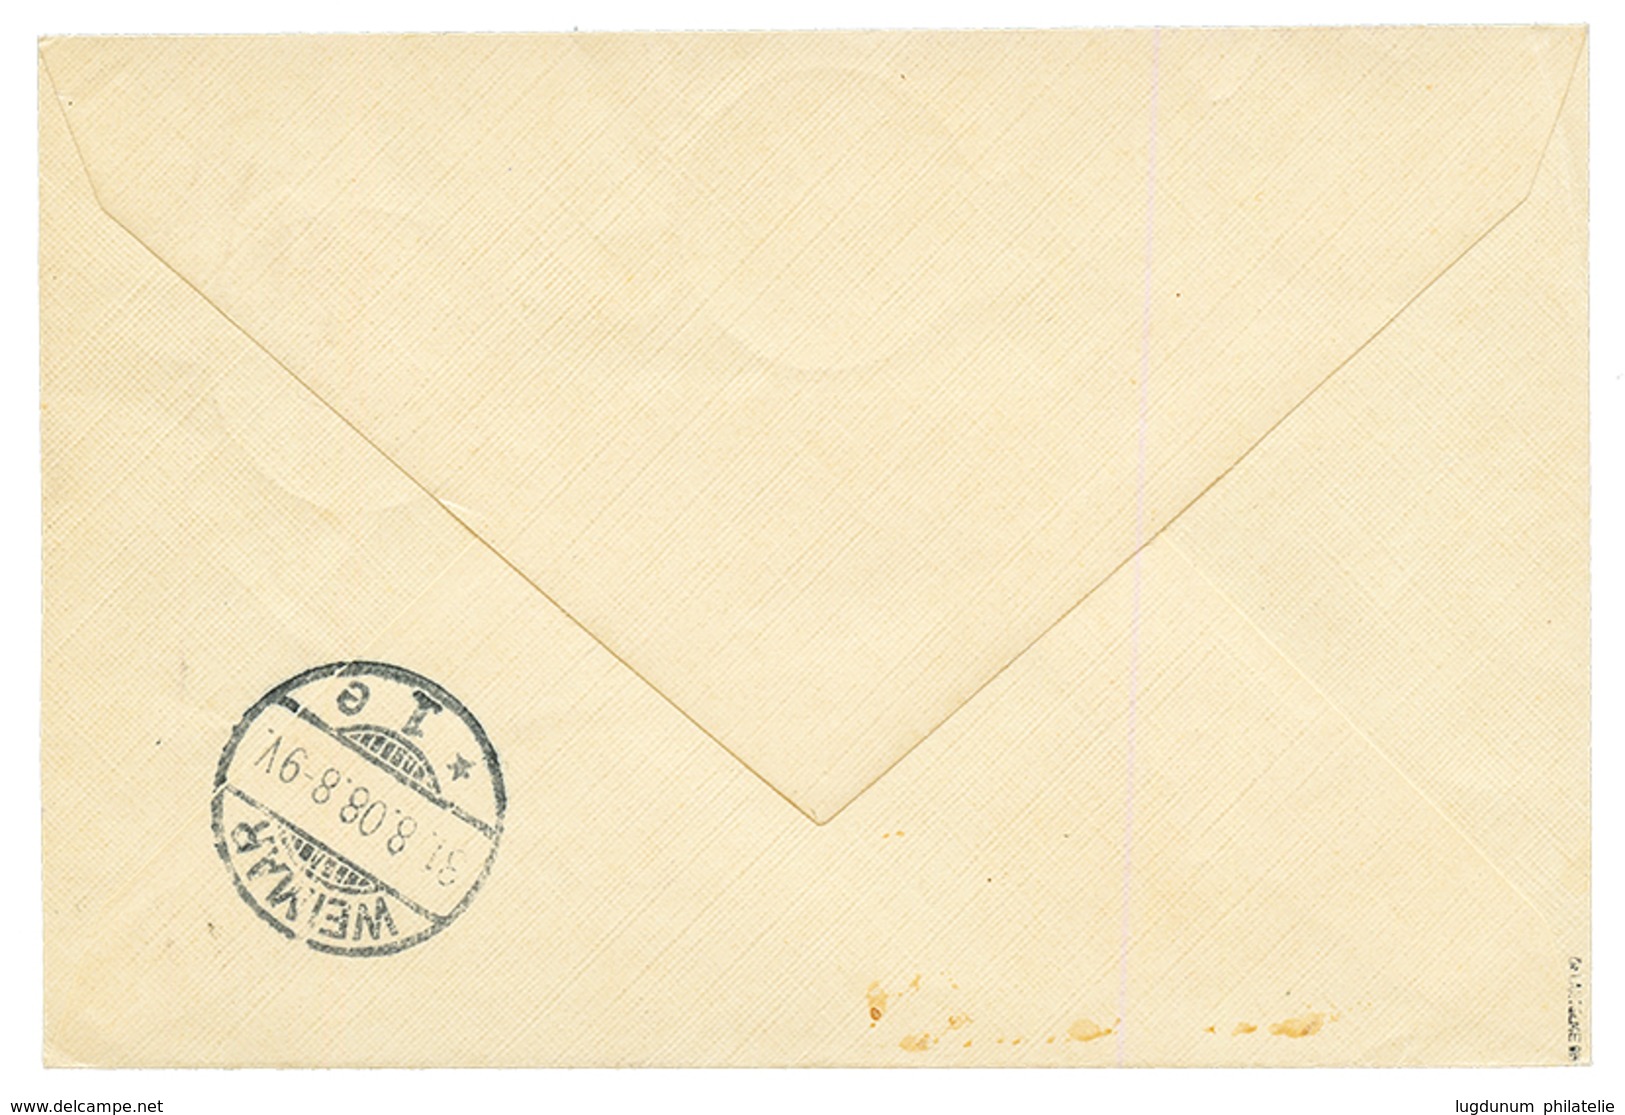 CAROLINES : 1908 5pf + 25pf Canc. TRUK KAROLINEN On REGISTERED Envelope To WEIMAR. RARE. Vf. - Karolinen